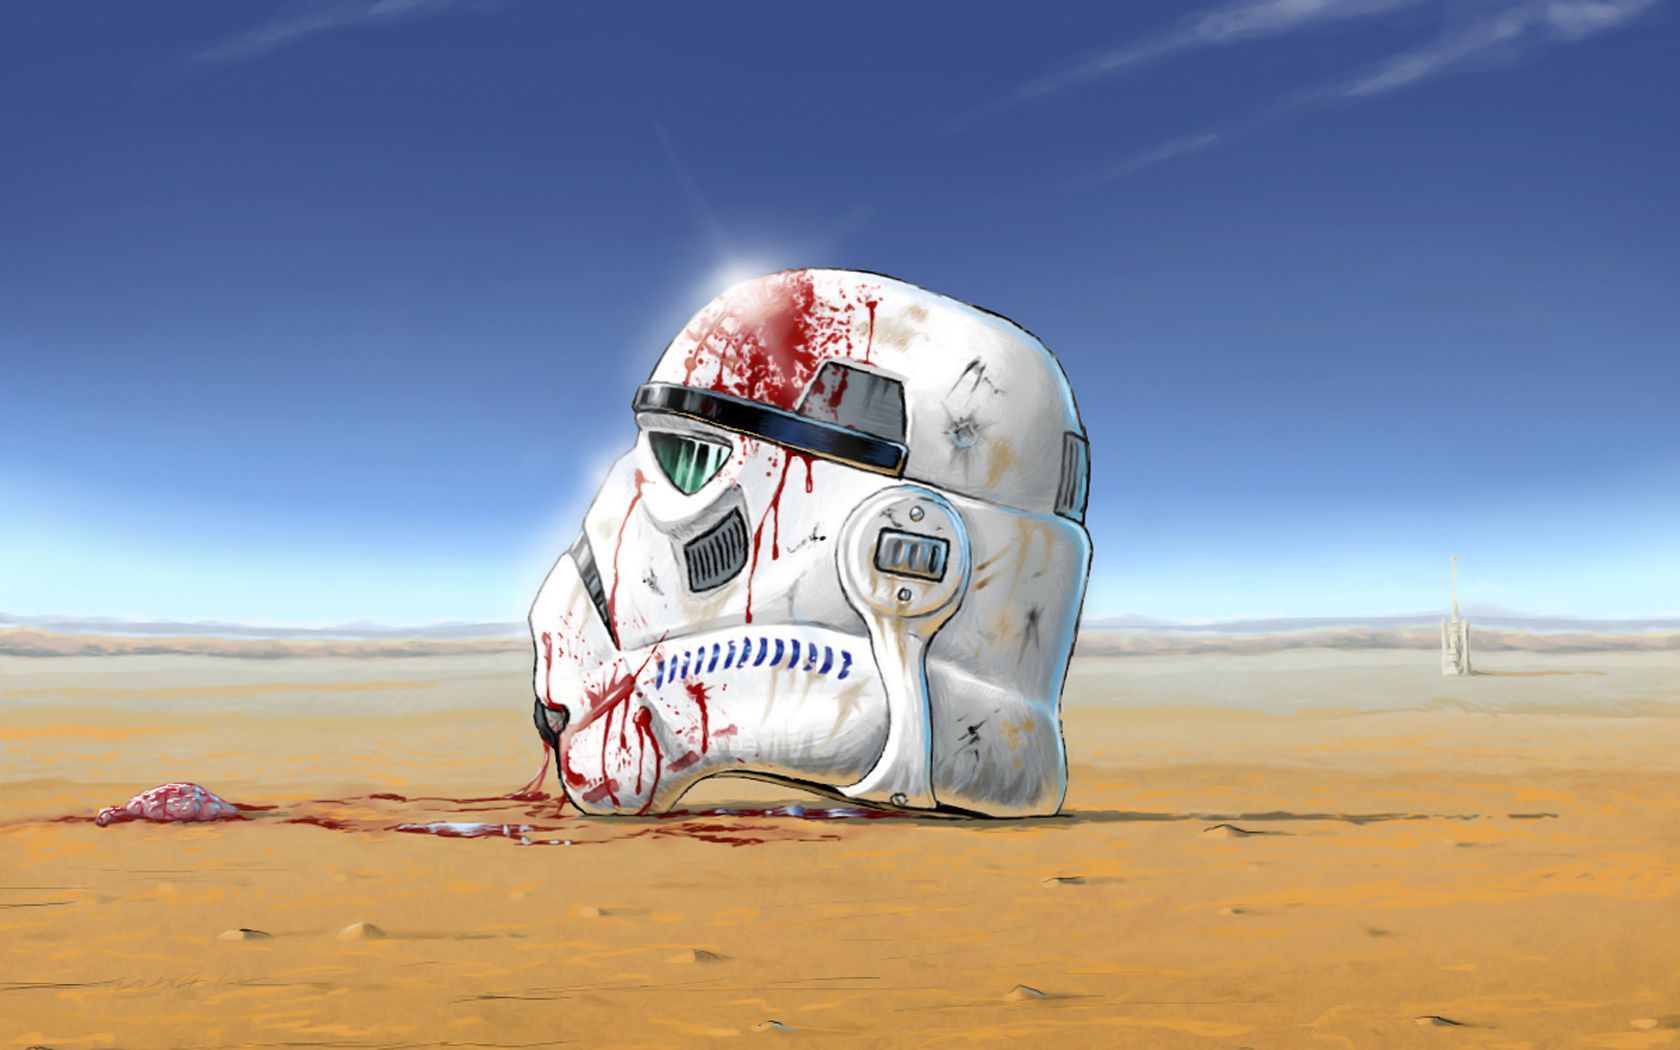 Bloody storm trooper helmet